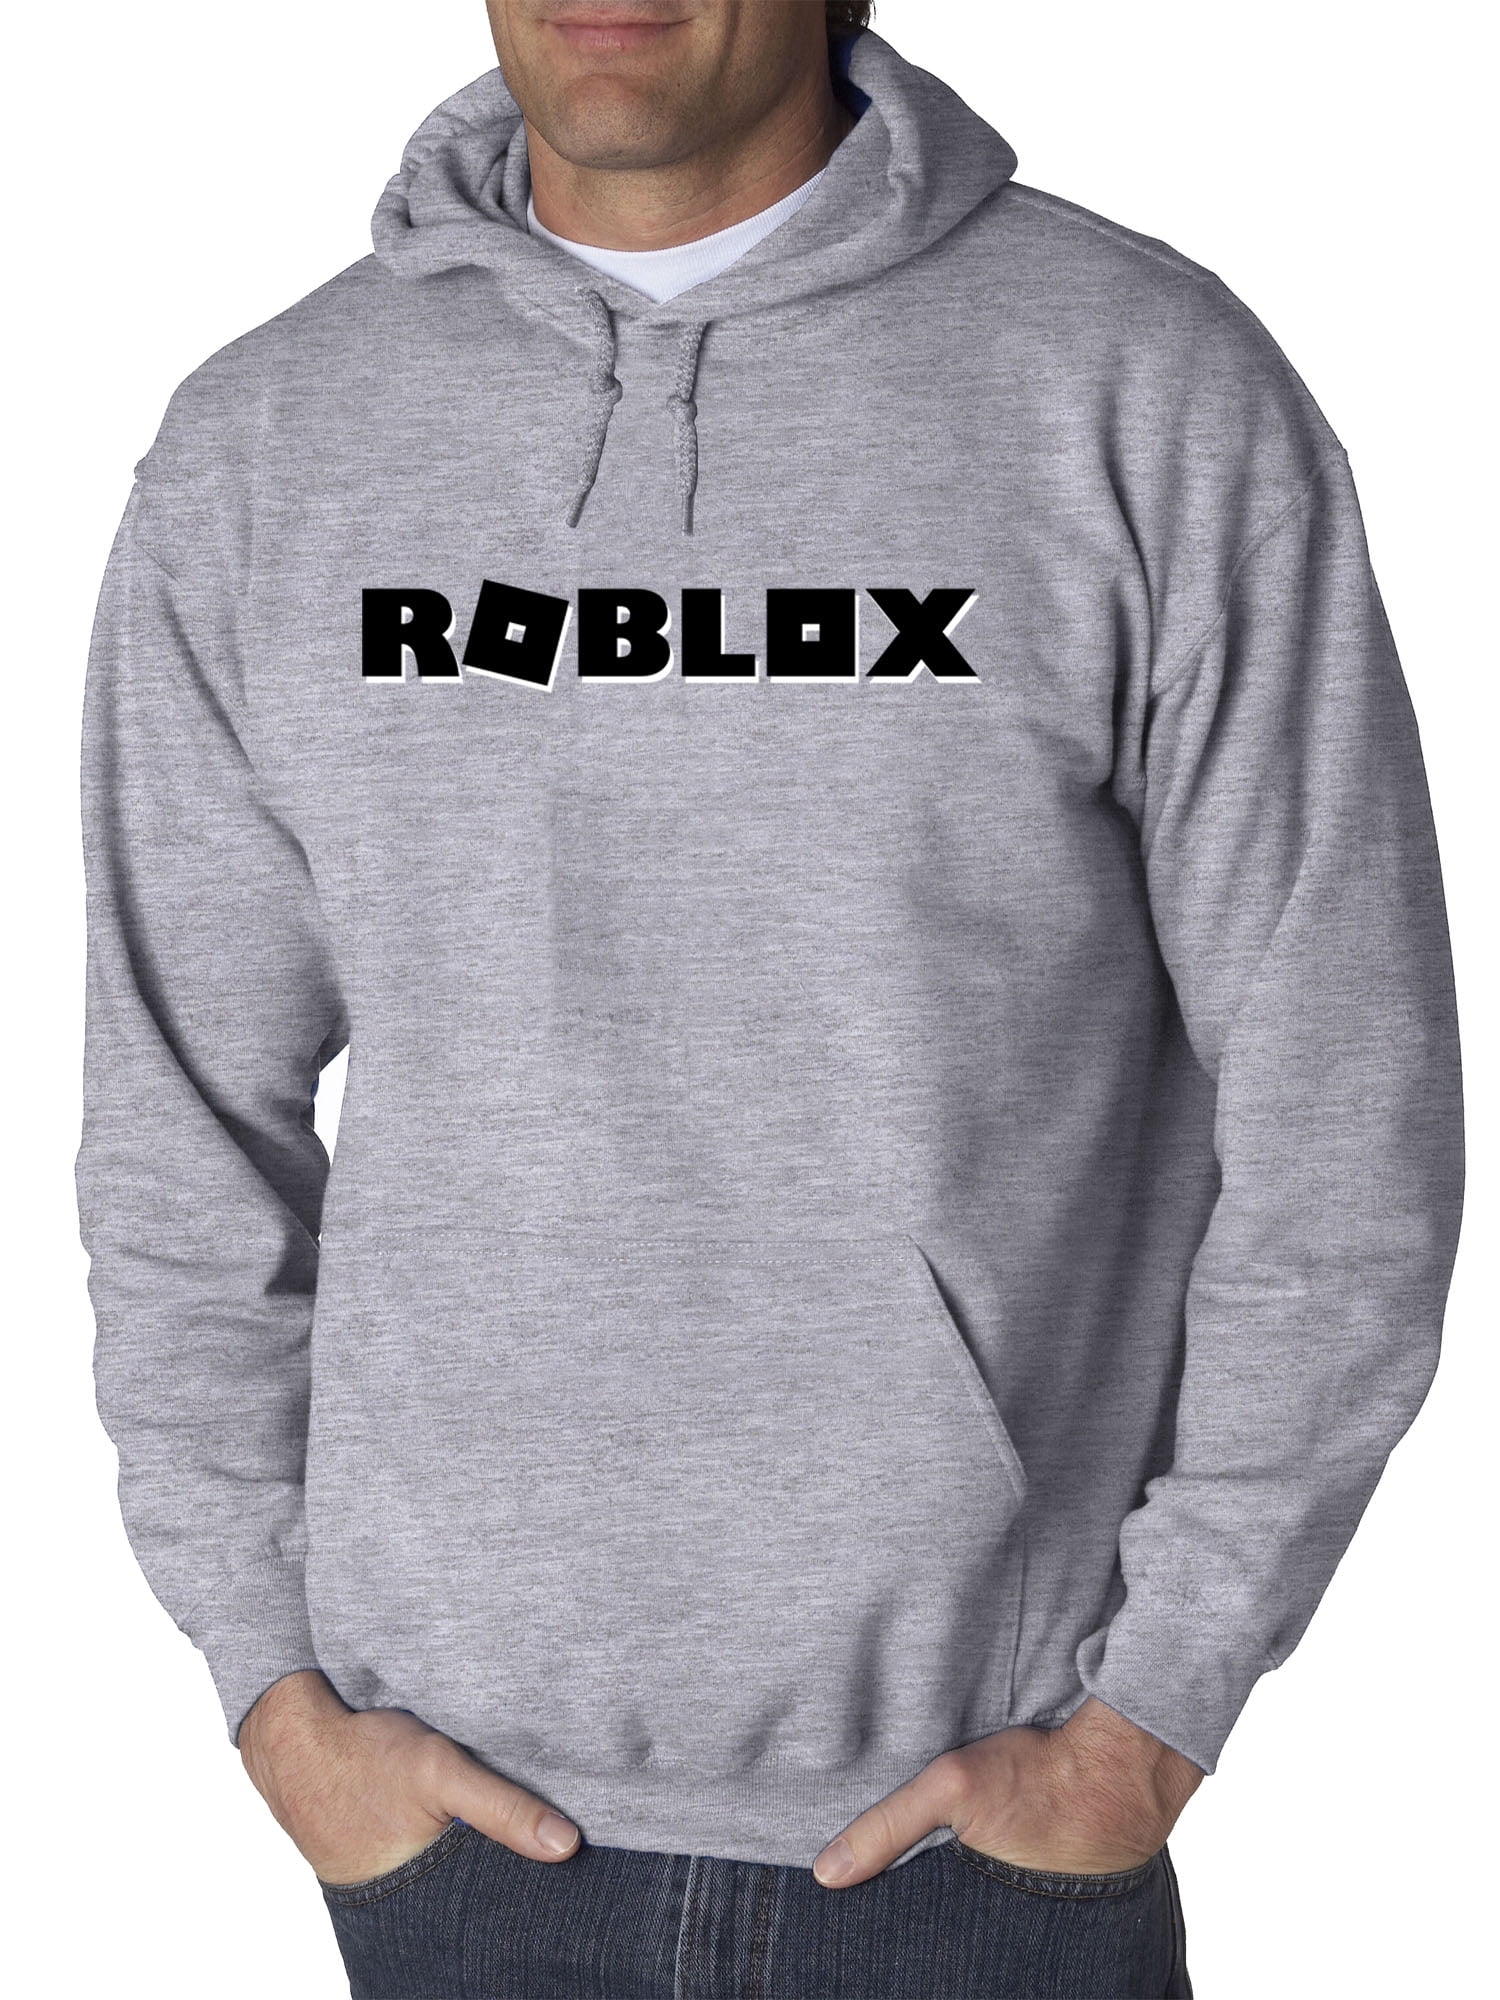 New Way New Way 1168 Adult Hoodie Roblox Block Logo Game - blue off white hoodie roblox